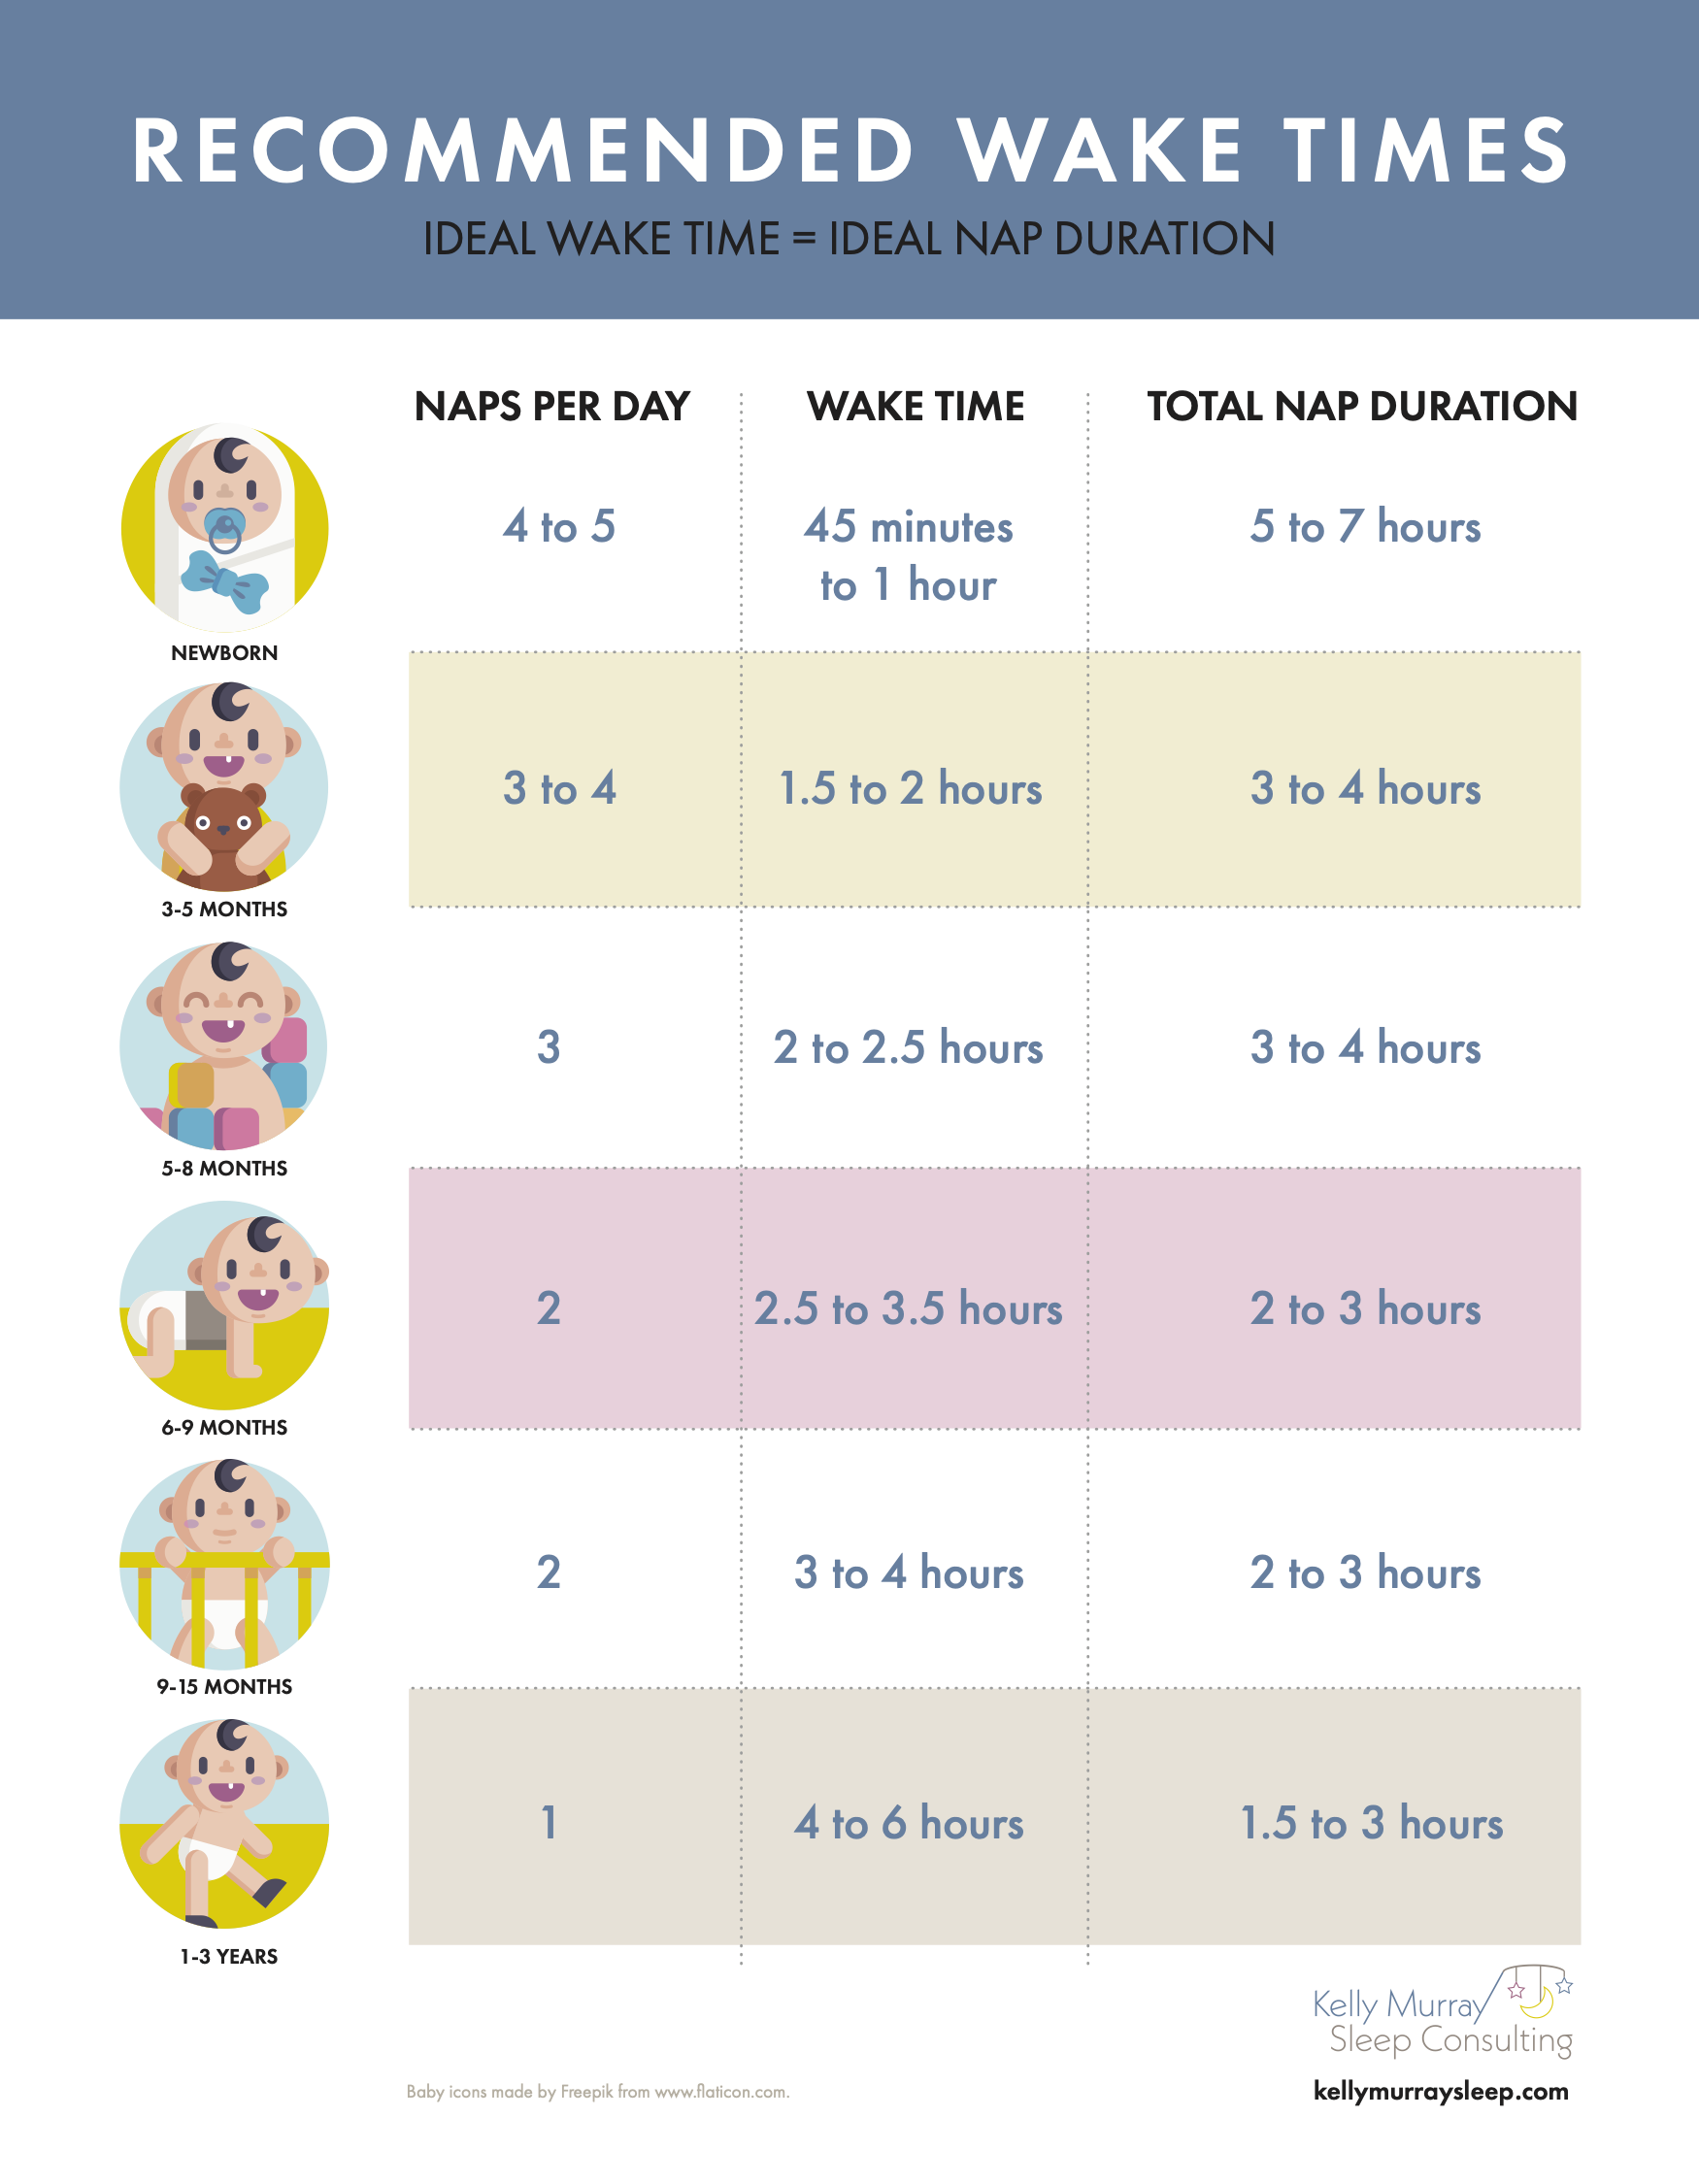 4 Month Old Sleep Schedule (Naps, Feeds & Bedtime)